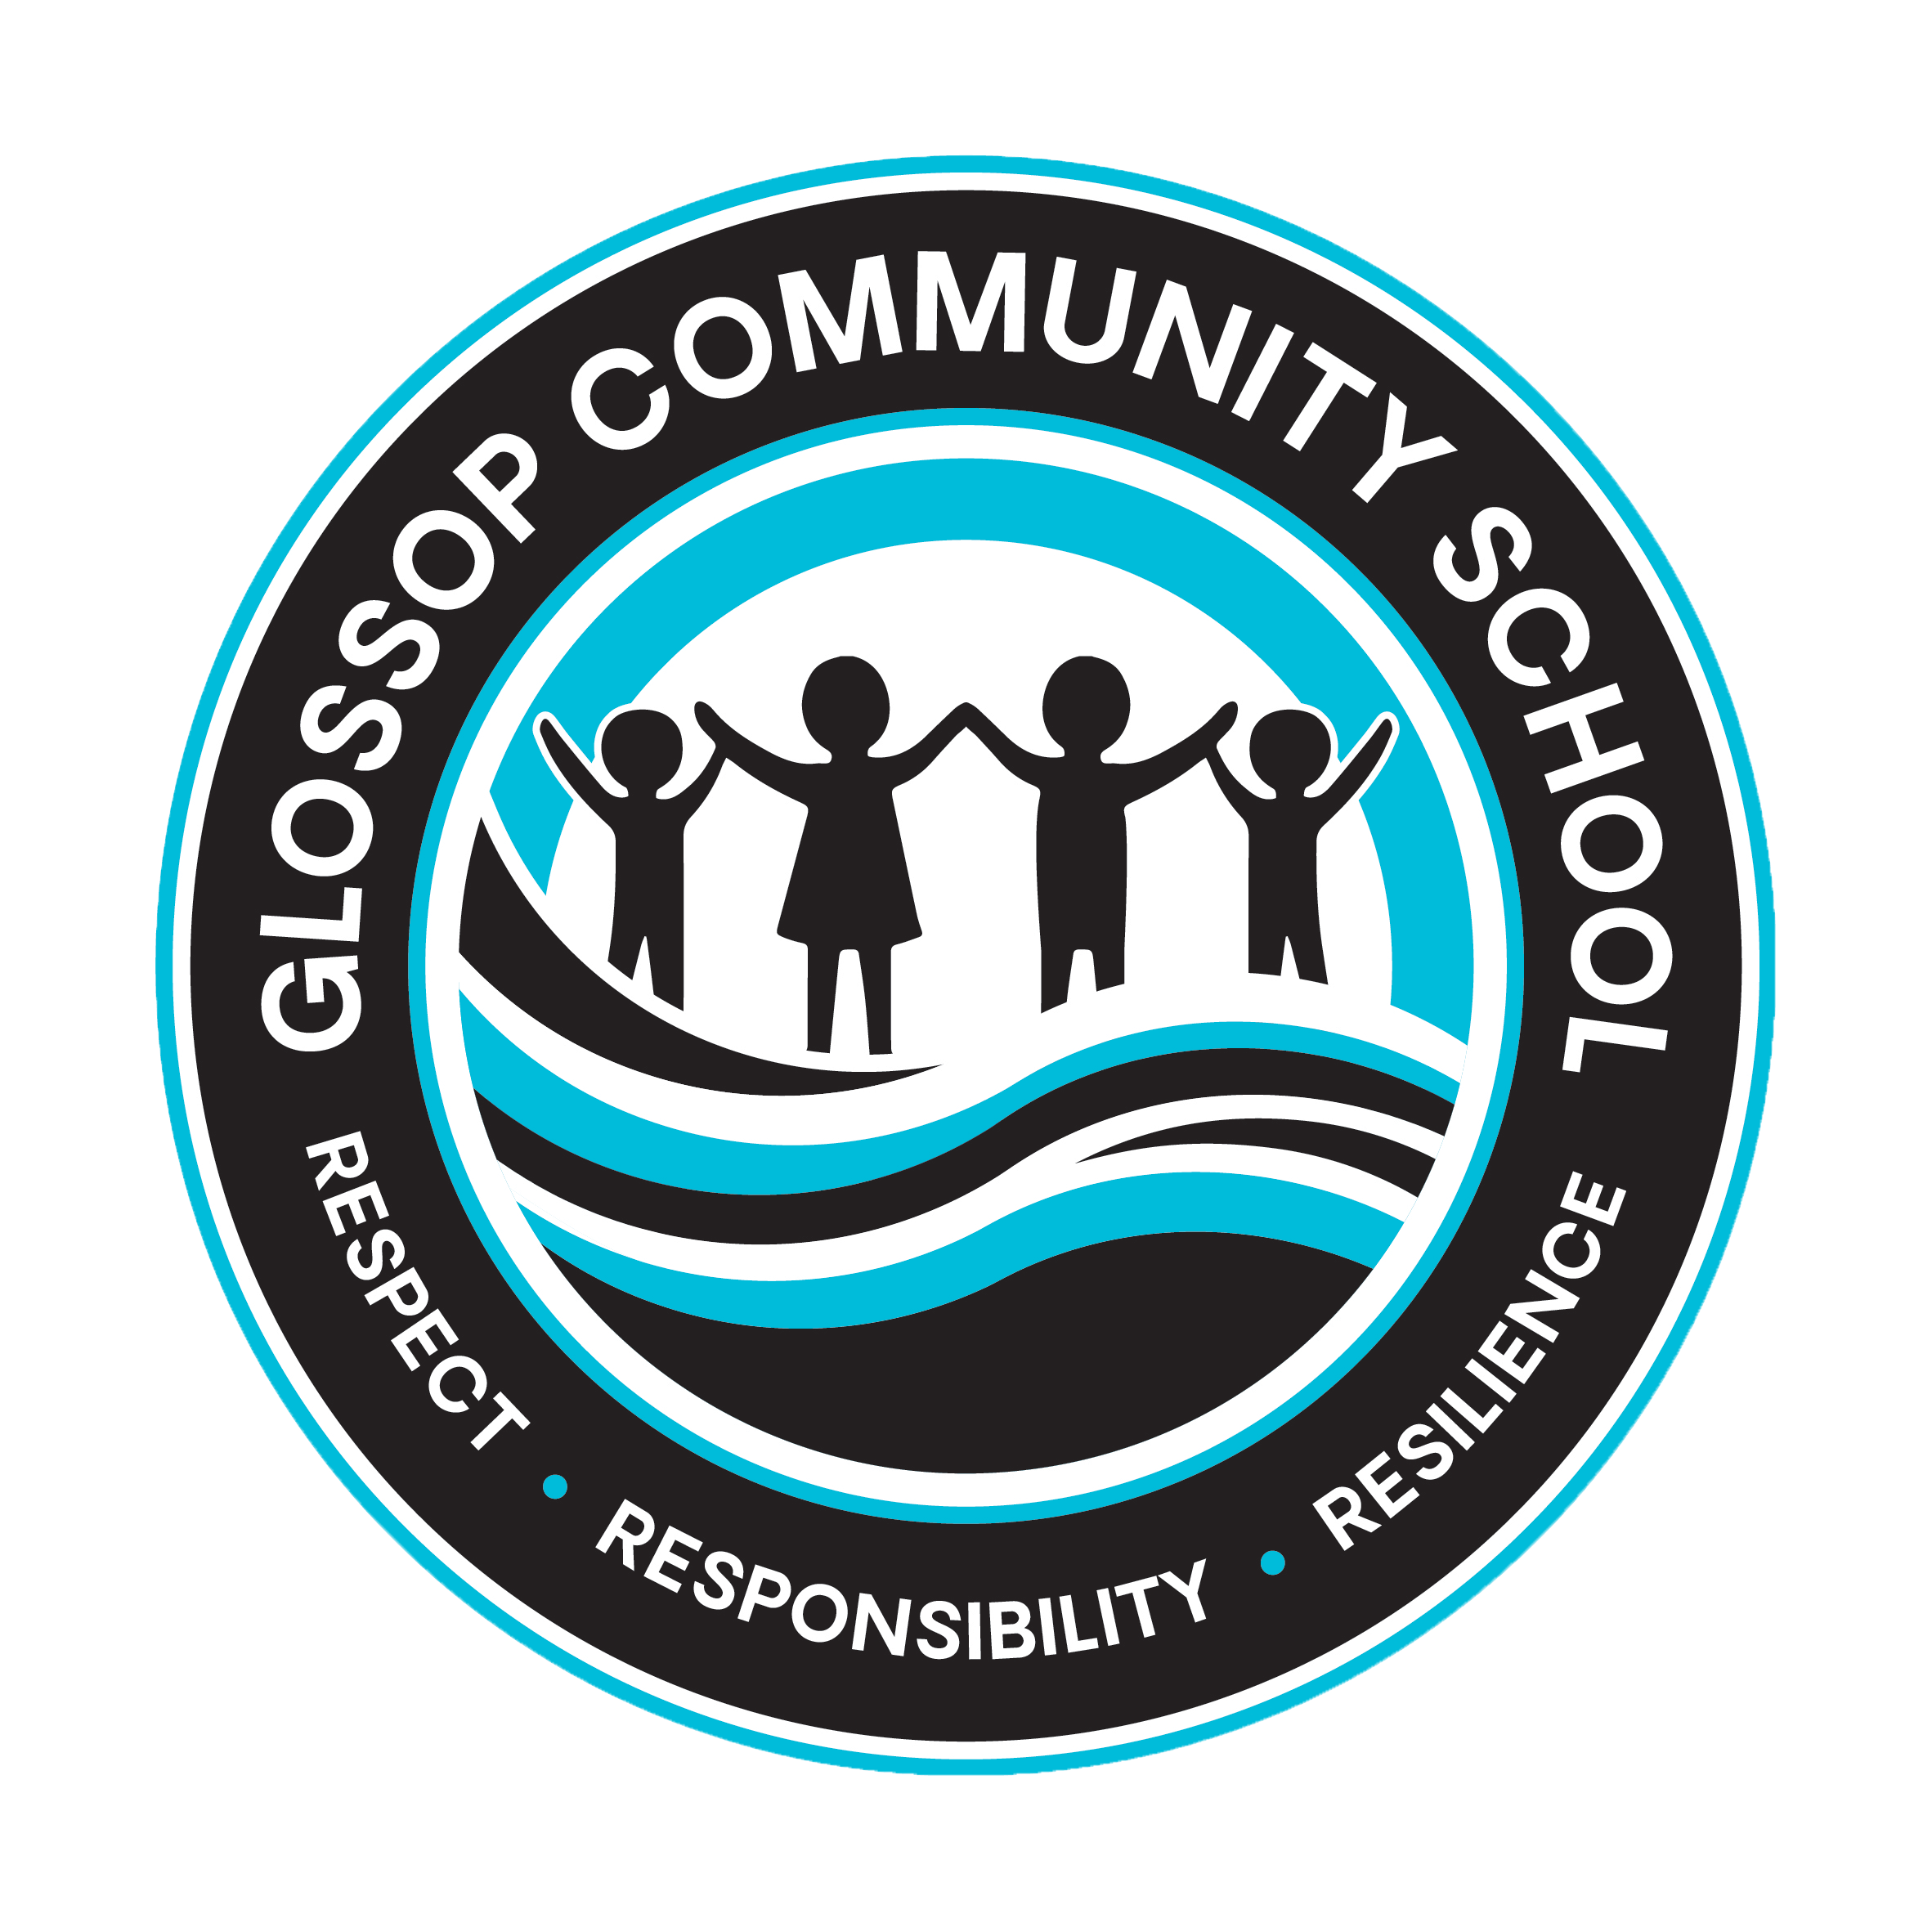 Glossop Primary Community School